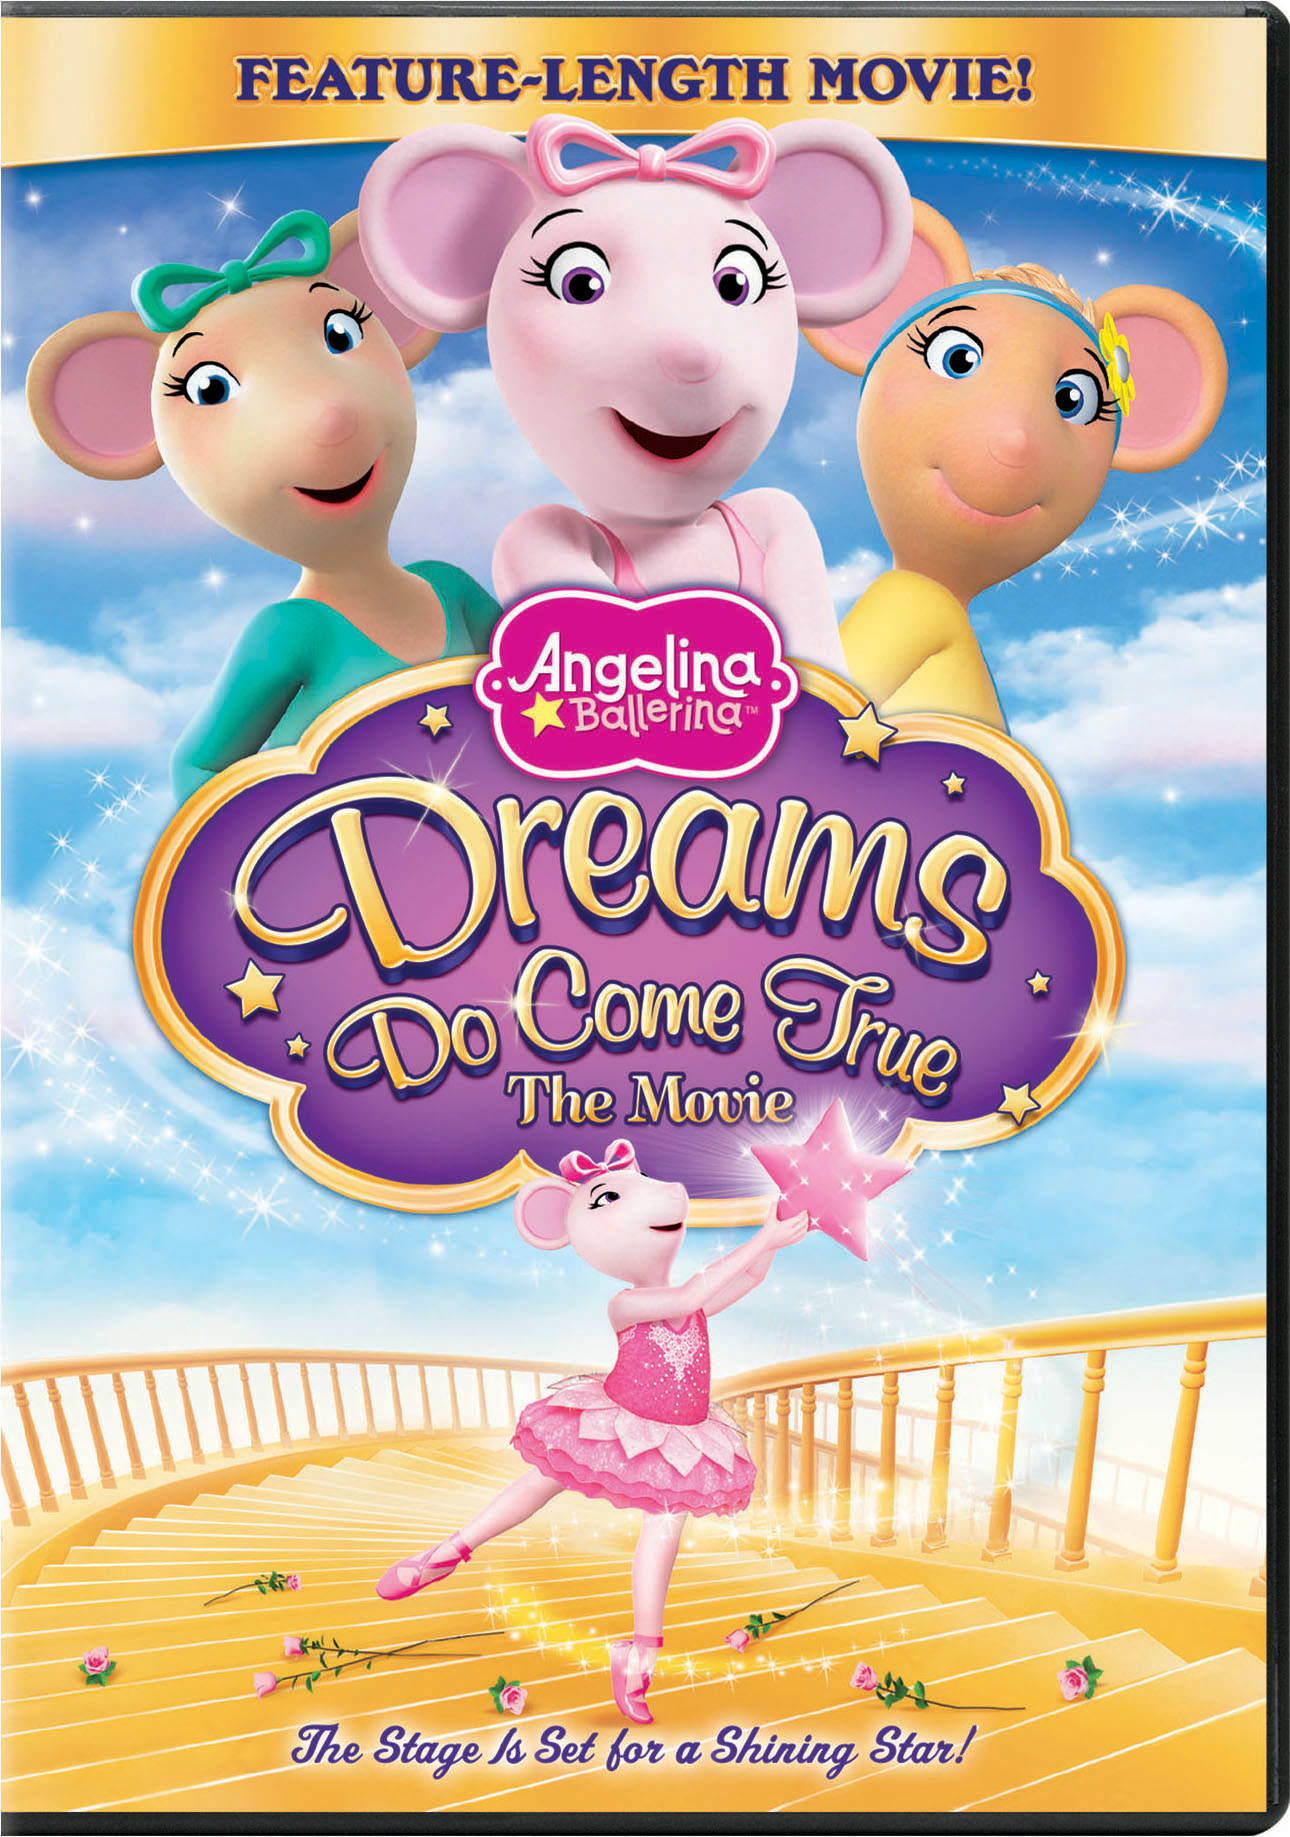 Movi　Buy　True　DVD　Dreams　Do　Angelina　The　GRUV　Ballerina:　Come